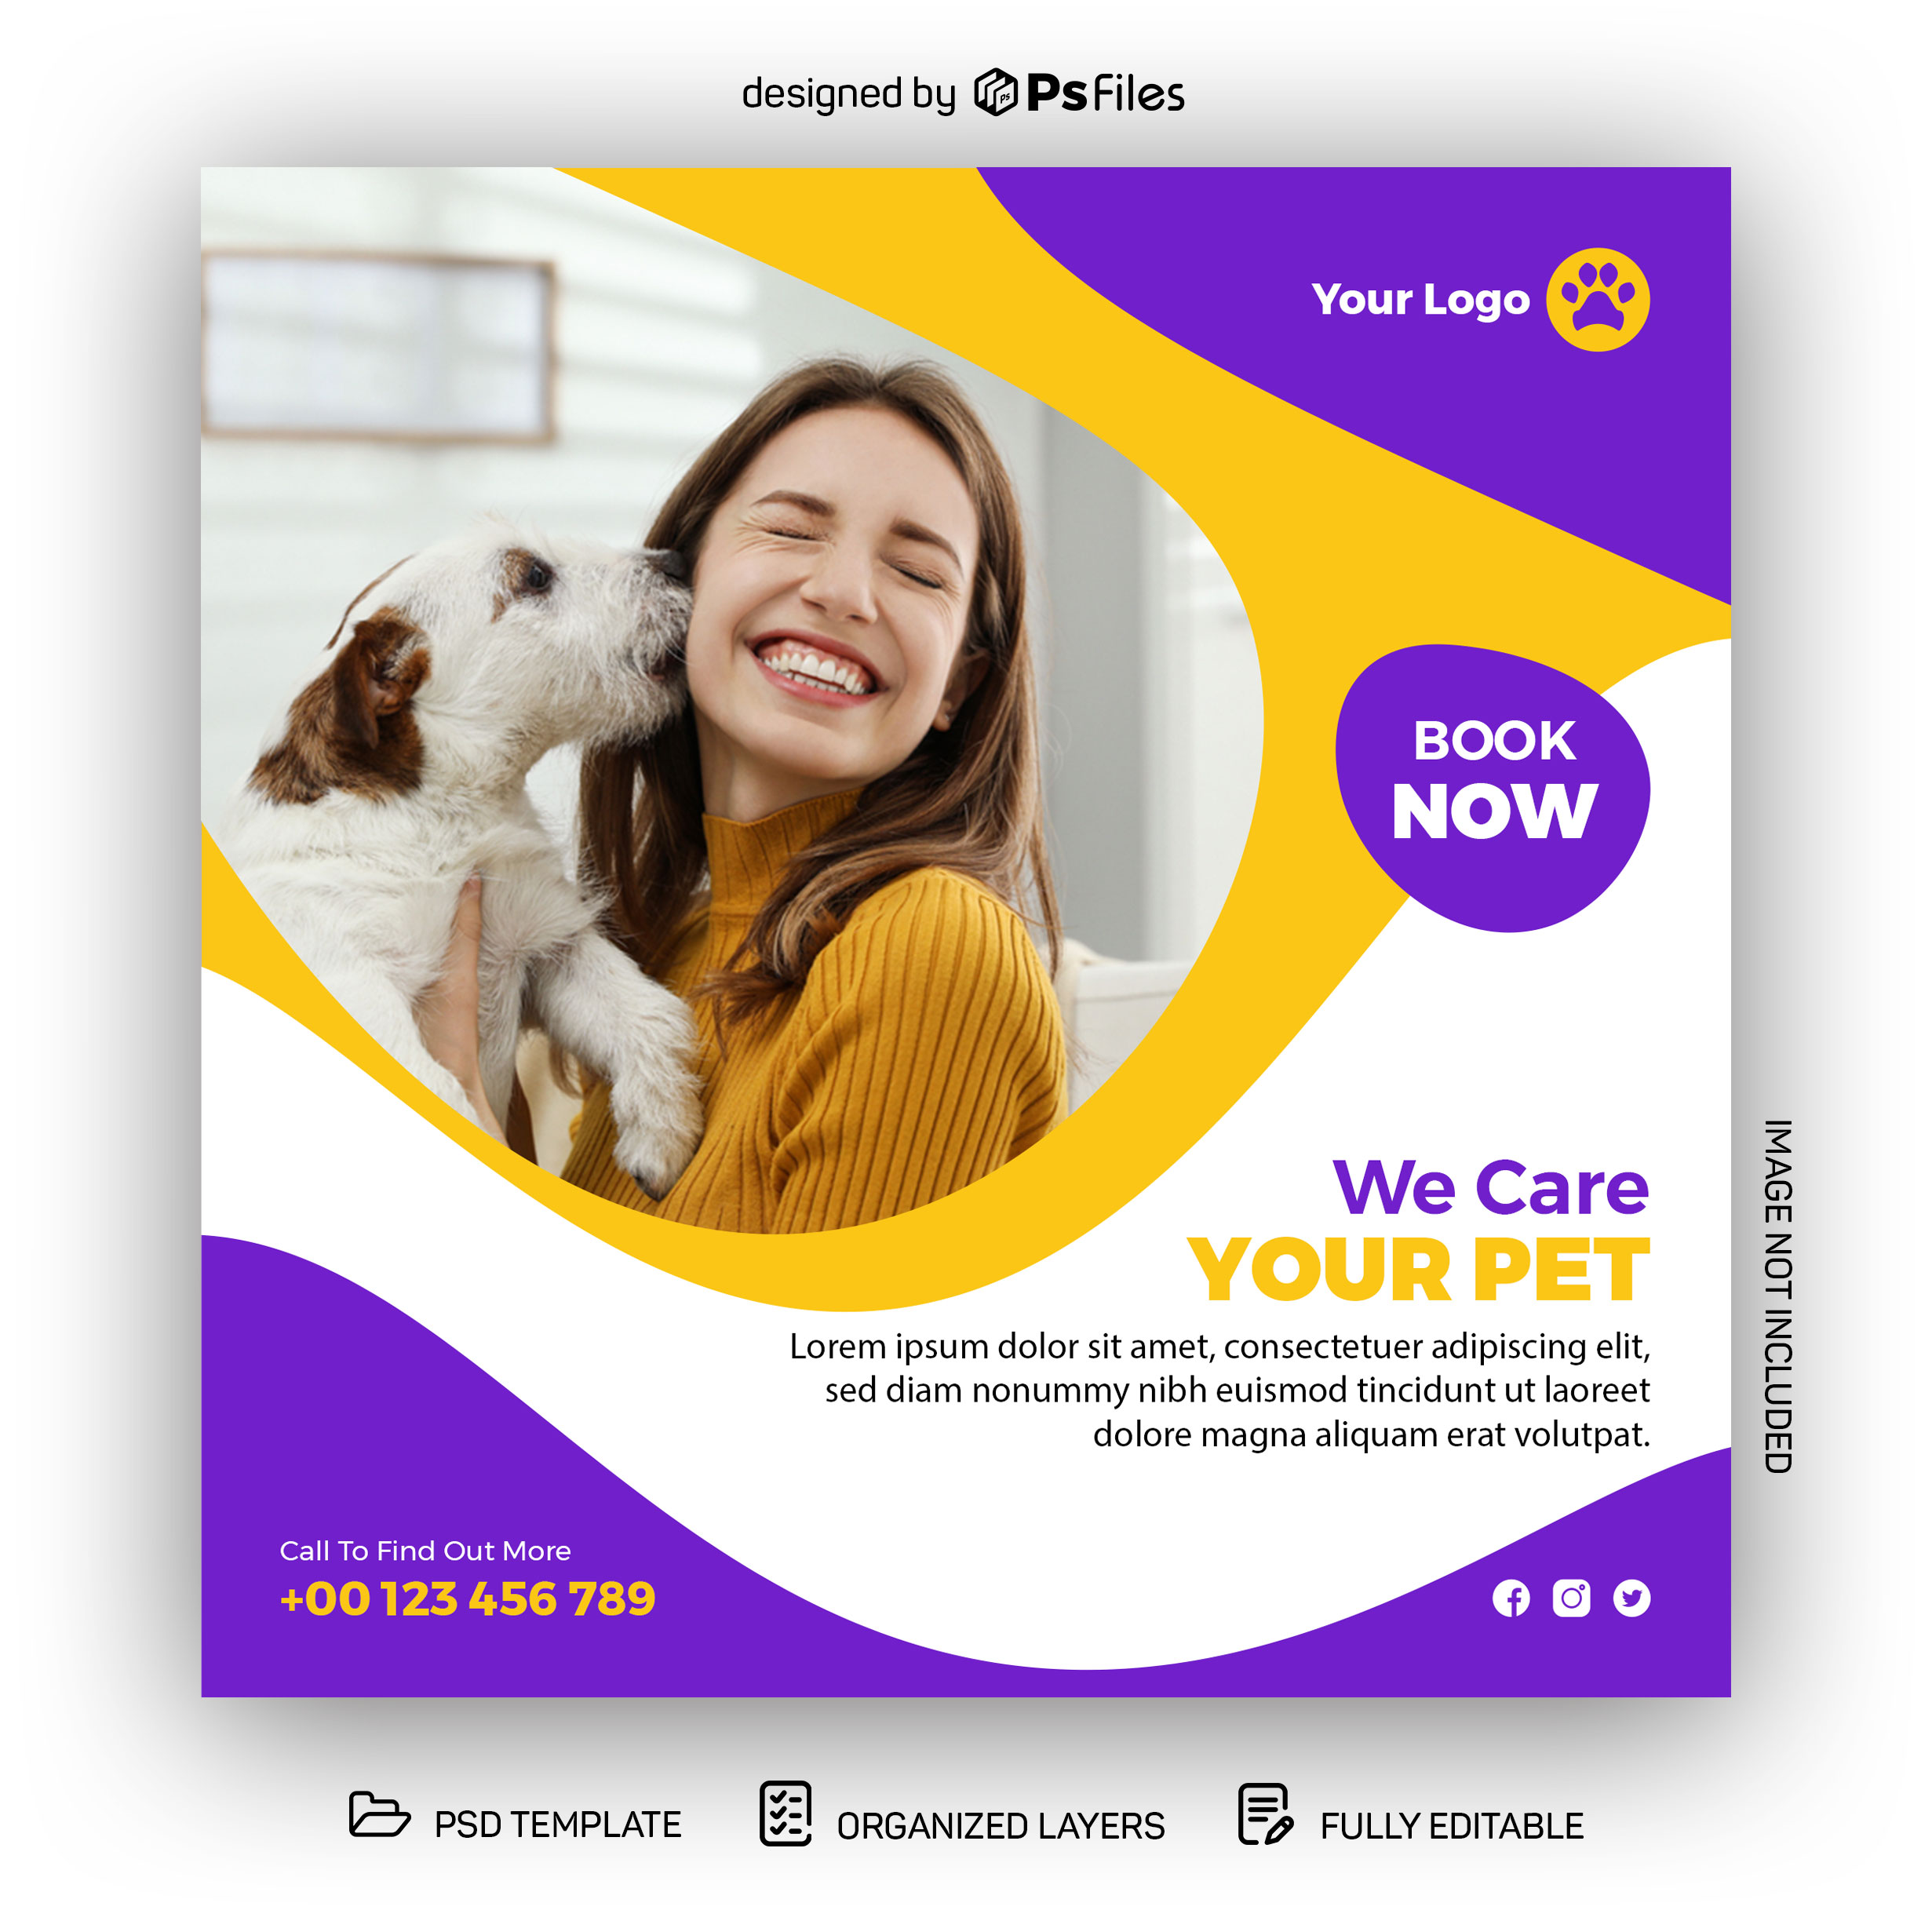 Free Pets Care Center Instagram Post Design PSD Template